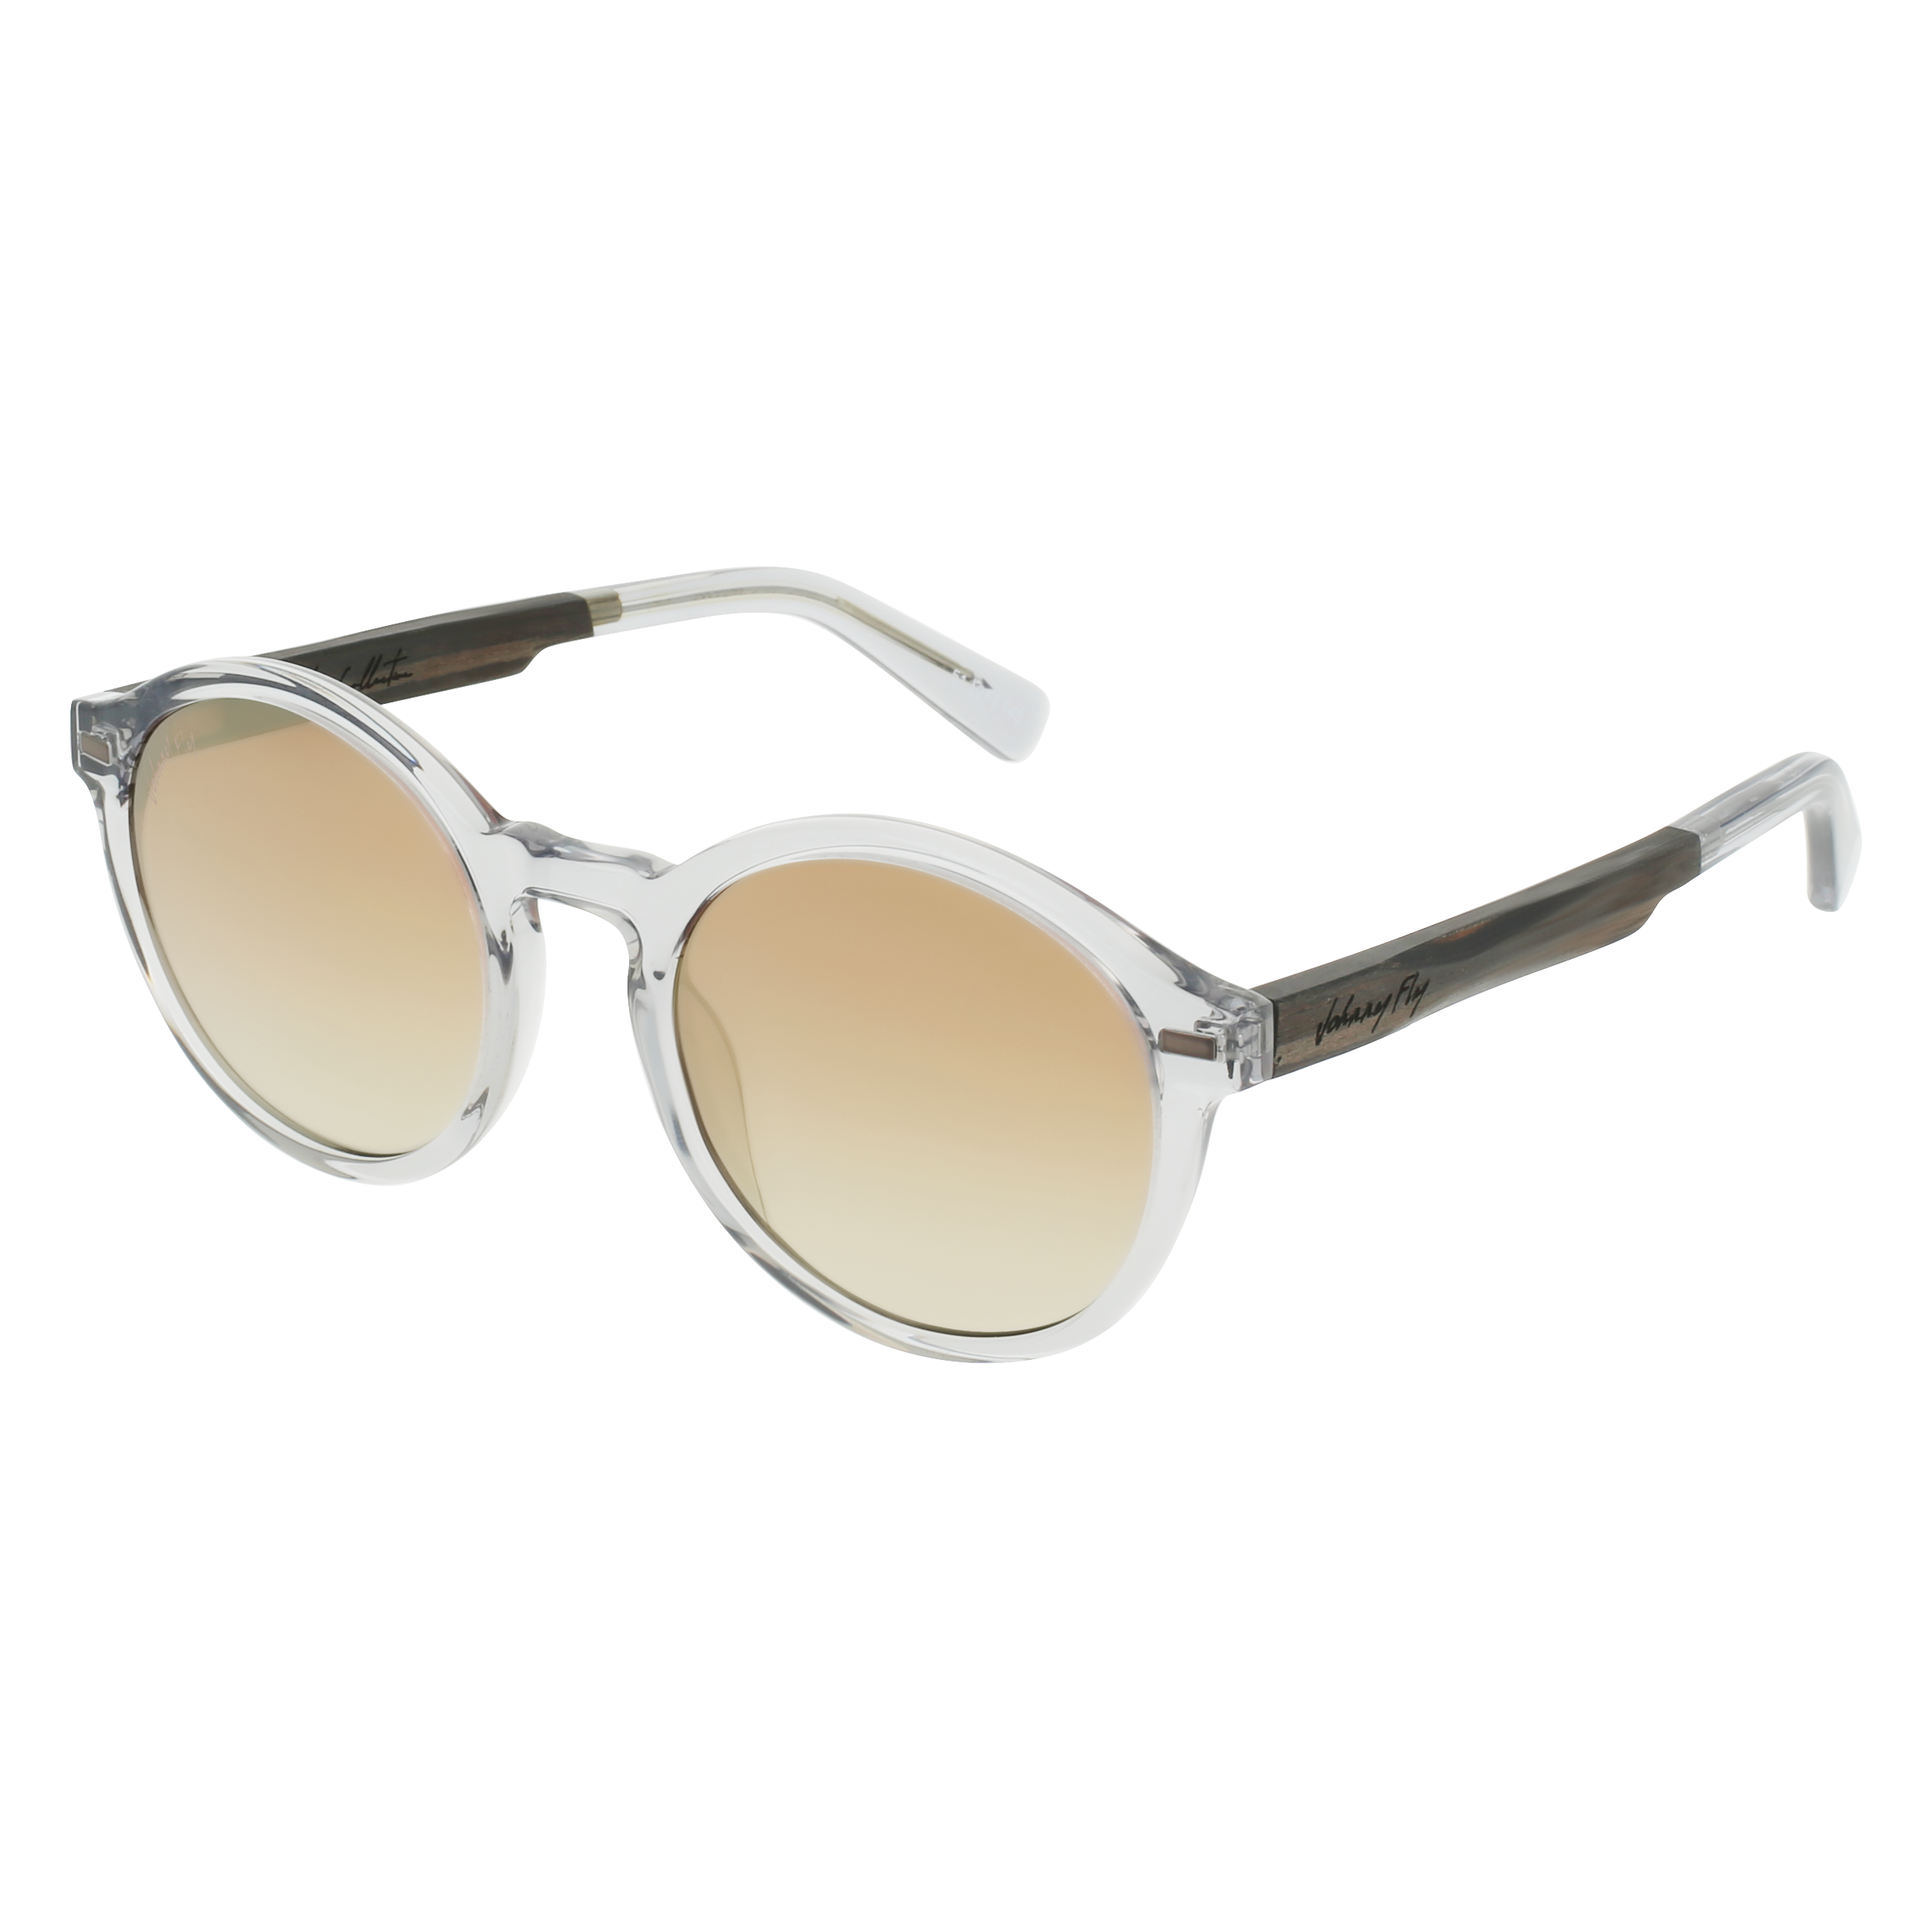 UFO Sunglasses Frame - Tinted Crystal- Johnny Fly | UFO-TCRY-REF-GLDGR | | 